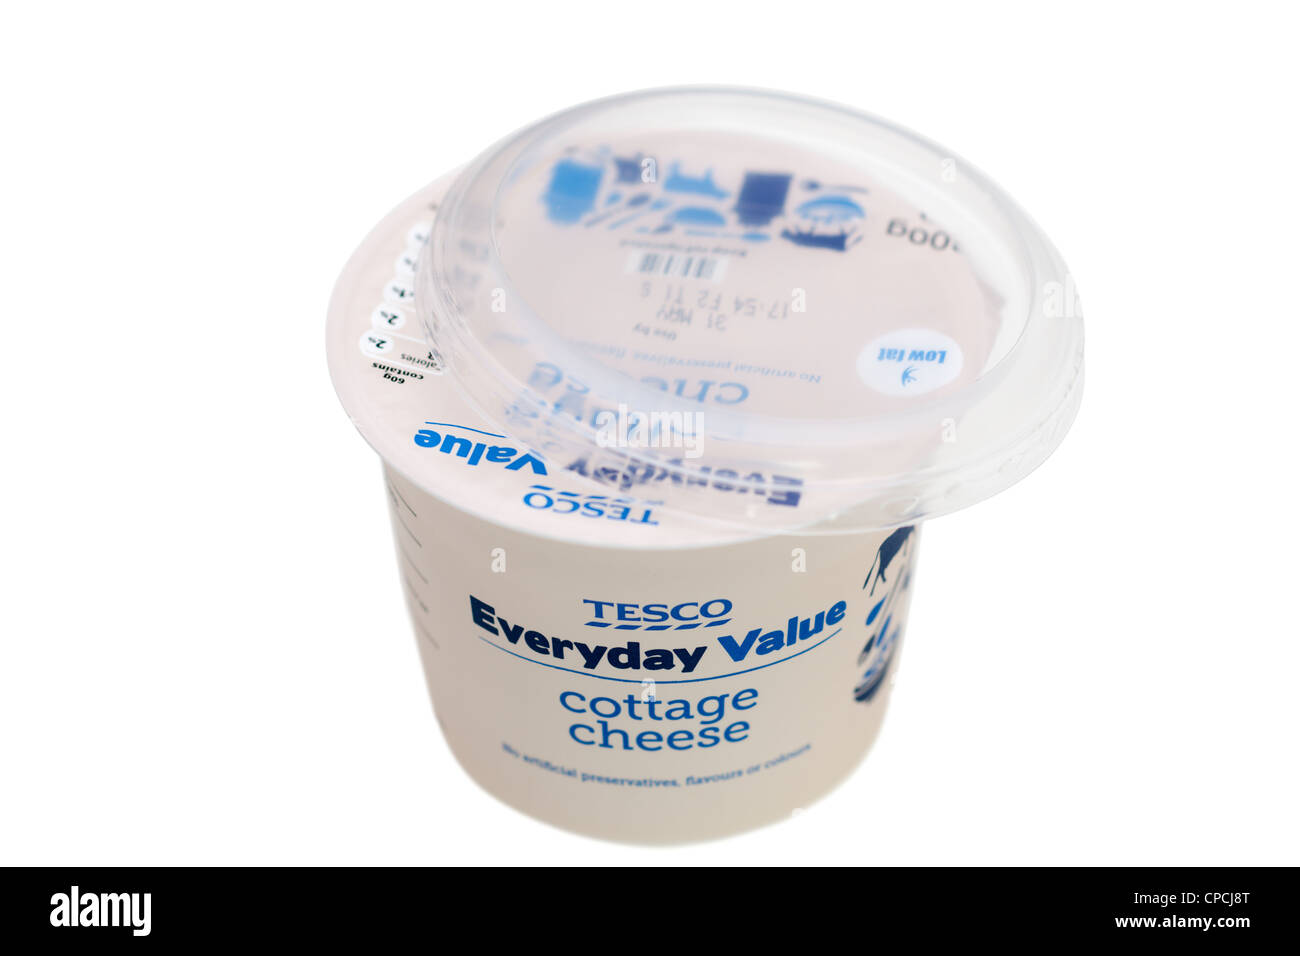 Carton of Tesco Everday value cottage cheese Stock Photo